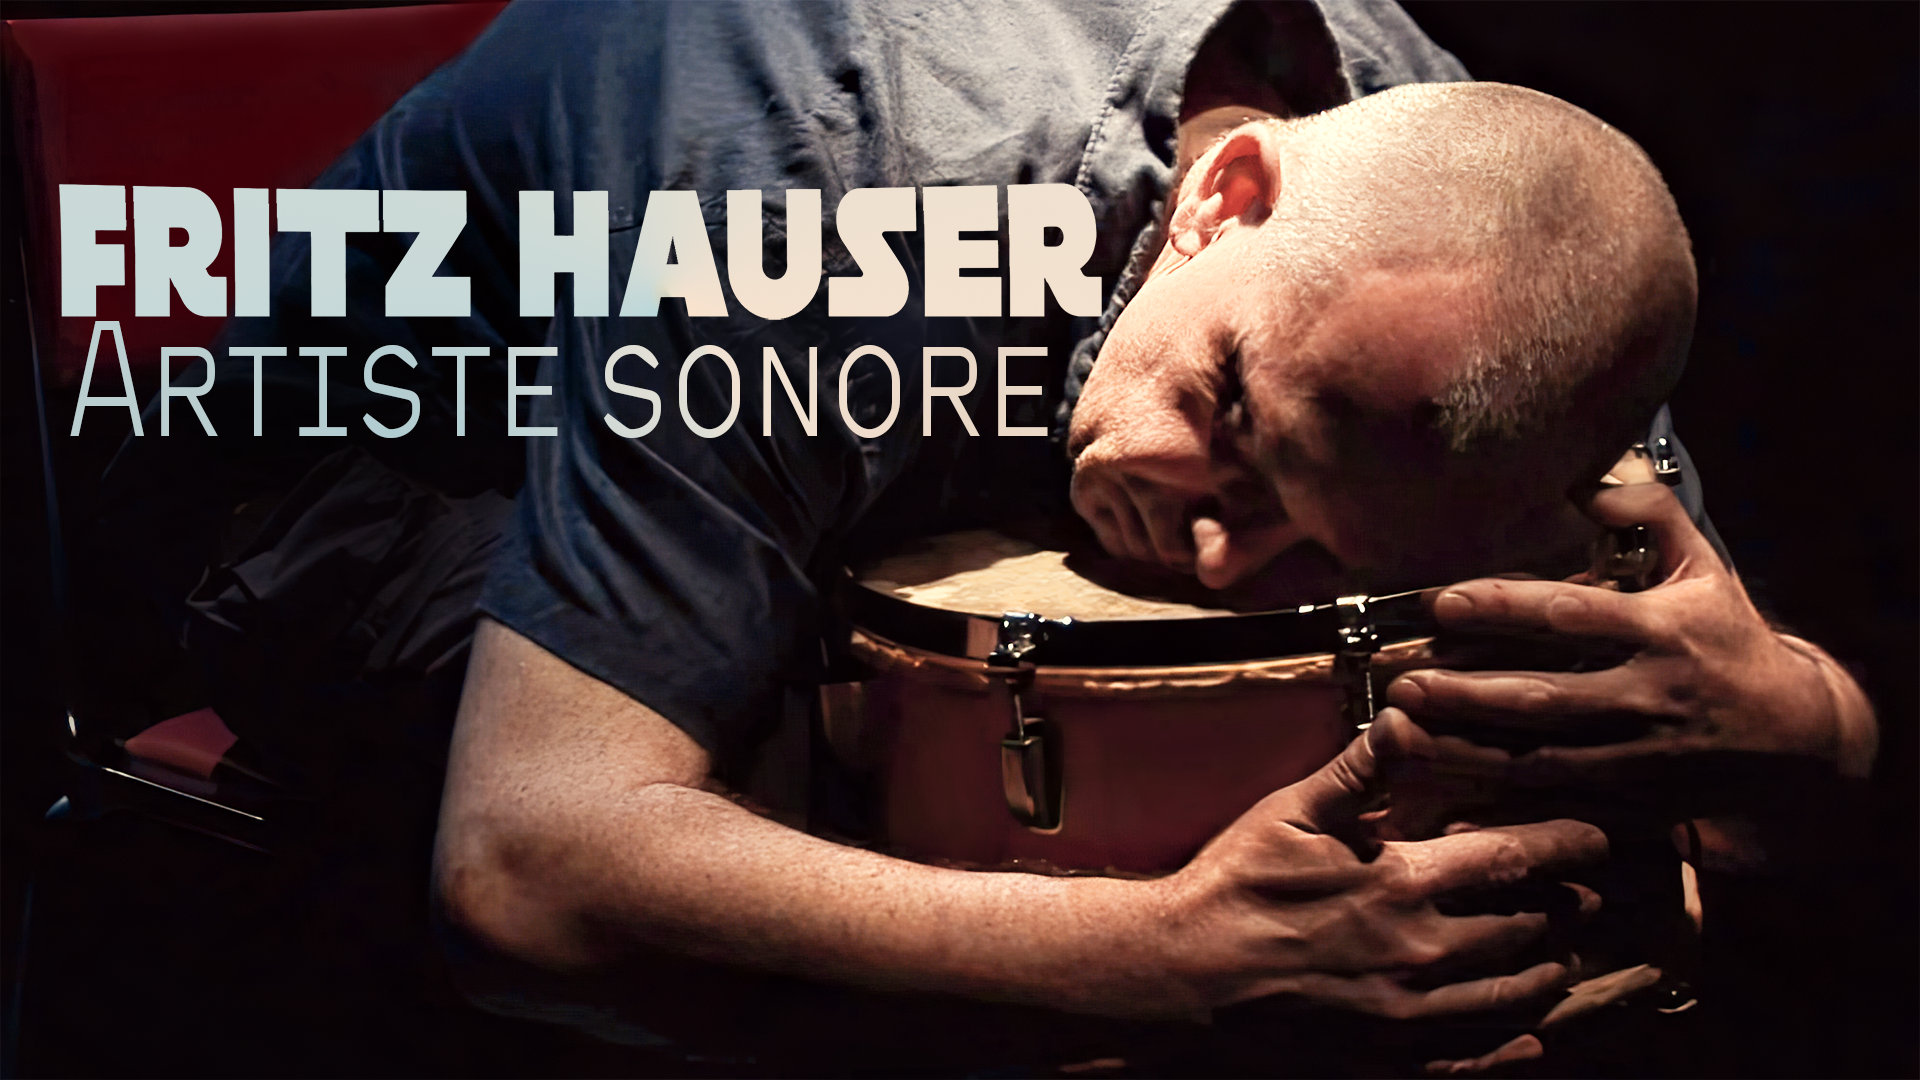 Fritz Hauser - Artiste sonore